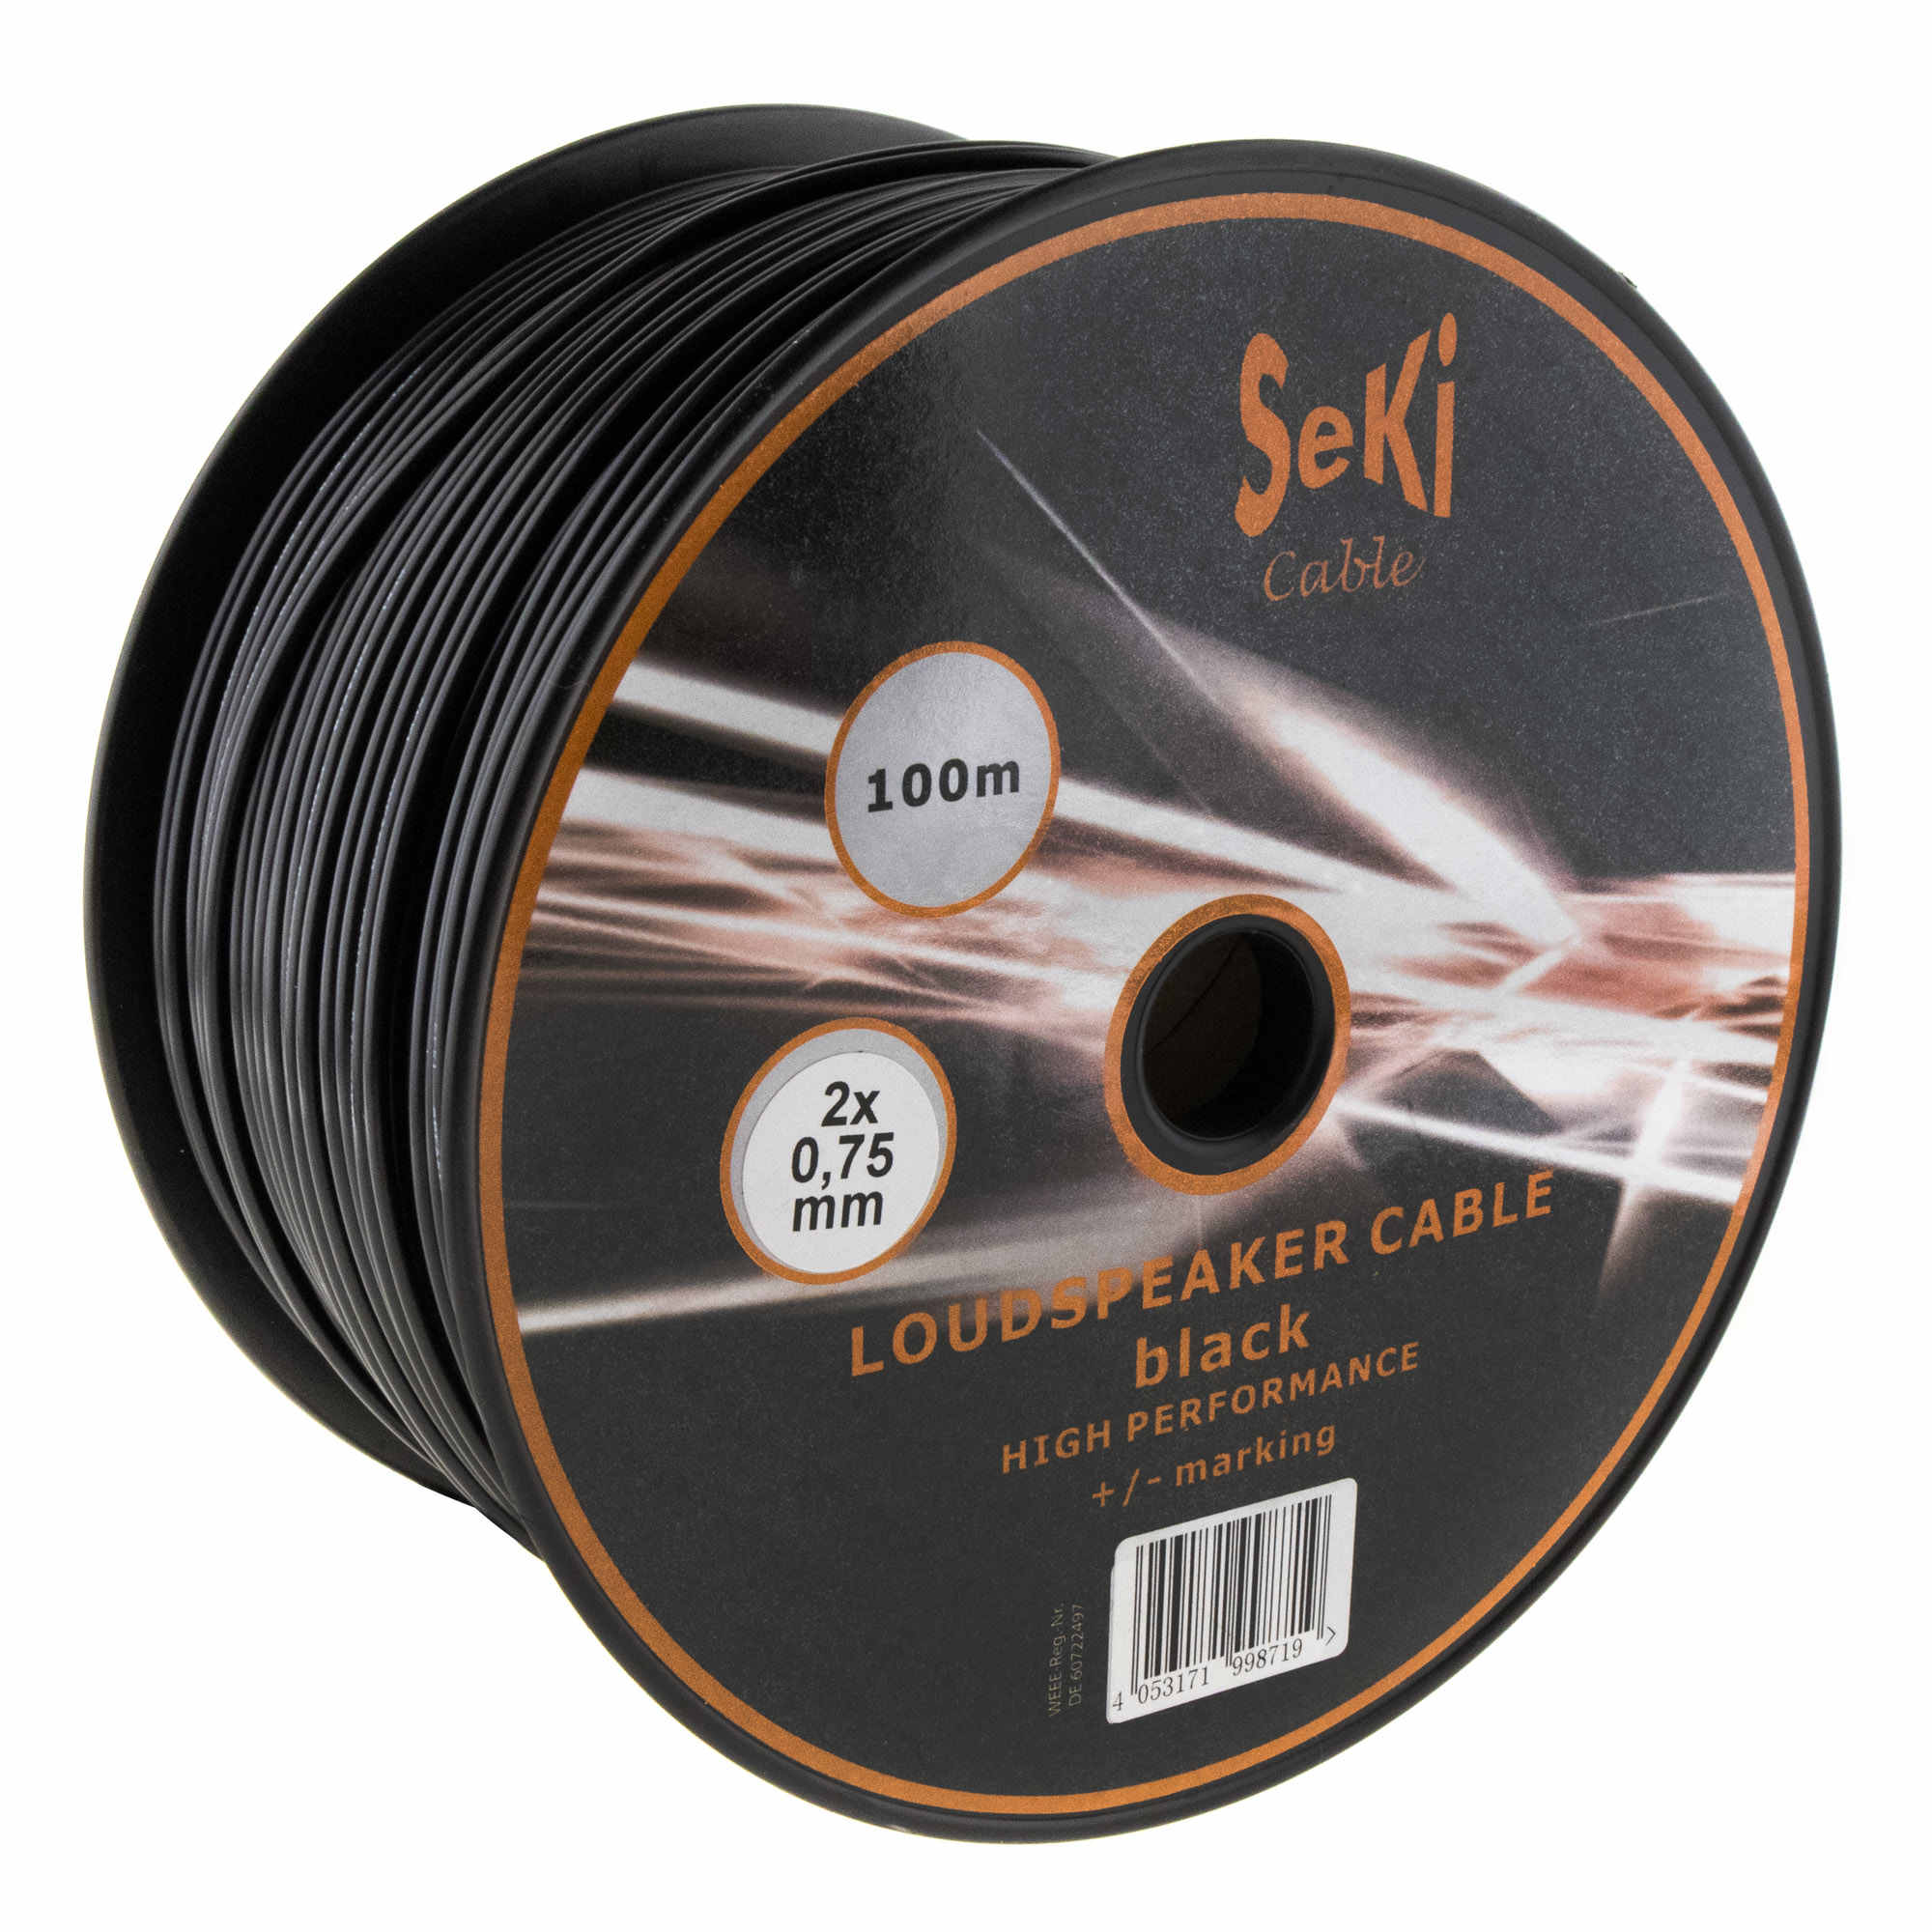 Loudspeaker cable black 100m 0.75mm